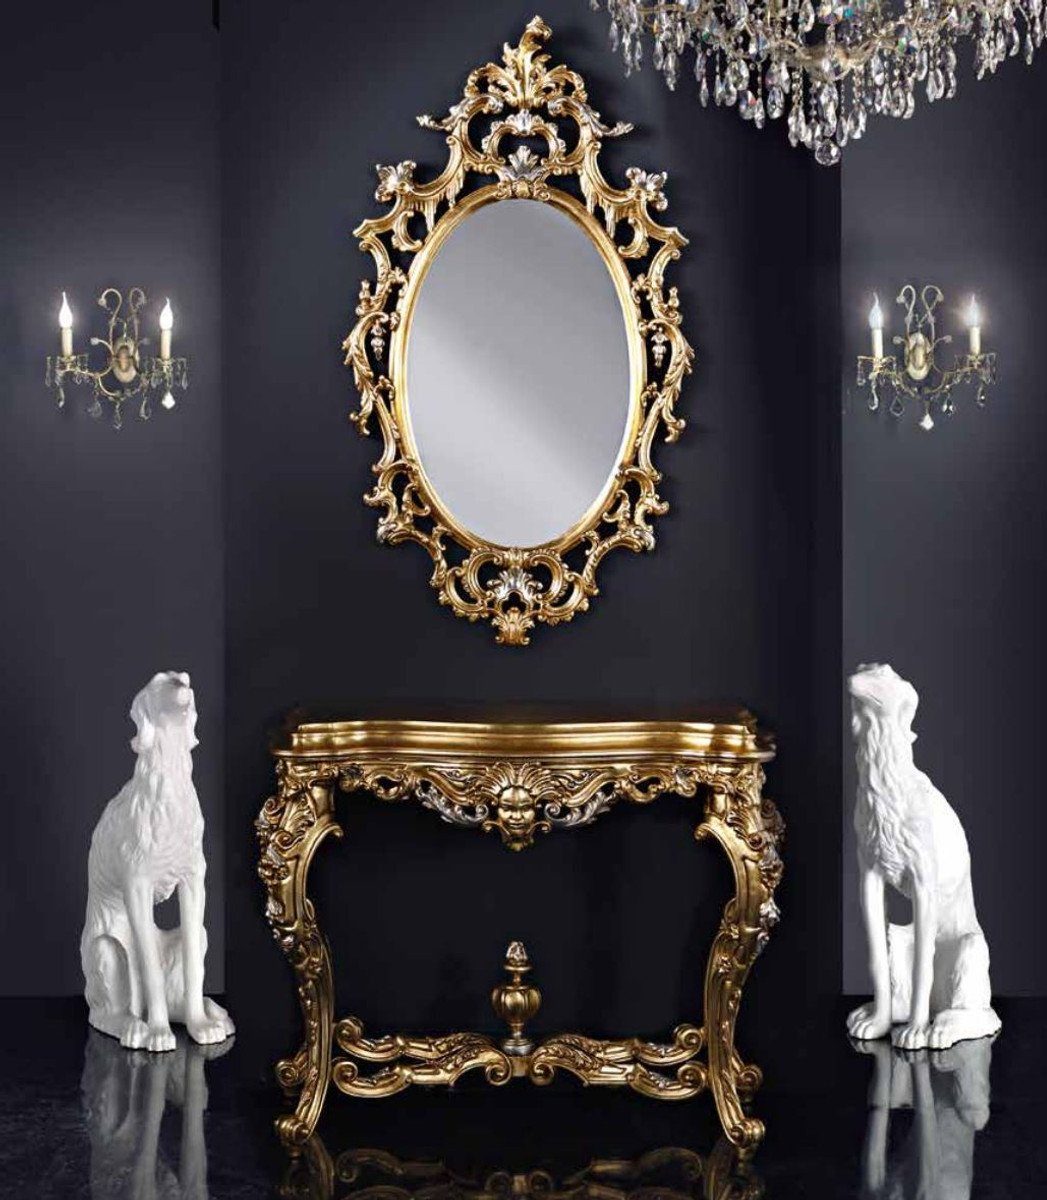 - Luxus Gold Luxus Hotel Barock & Made Schloß Barockspiegel Italy Barock / mit in Prunkvolle Spiegelkonsole Casa Barock - Silber Wandspiegel Qualität Möbel - Padrino - Konsole